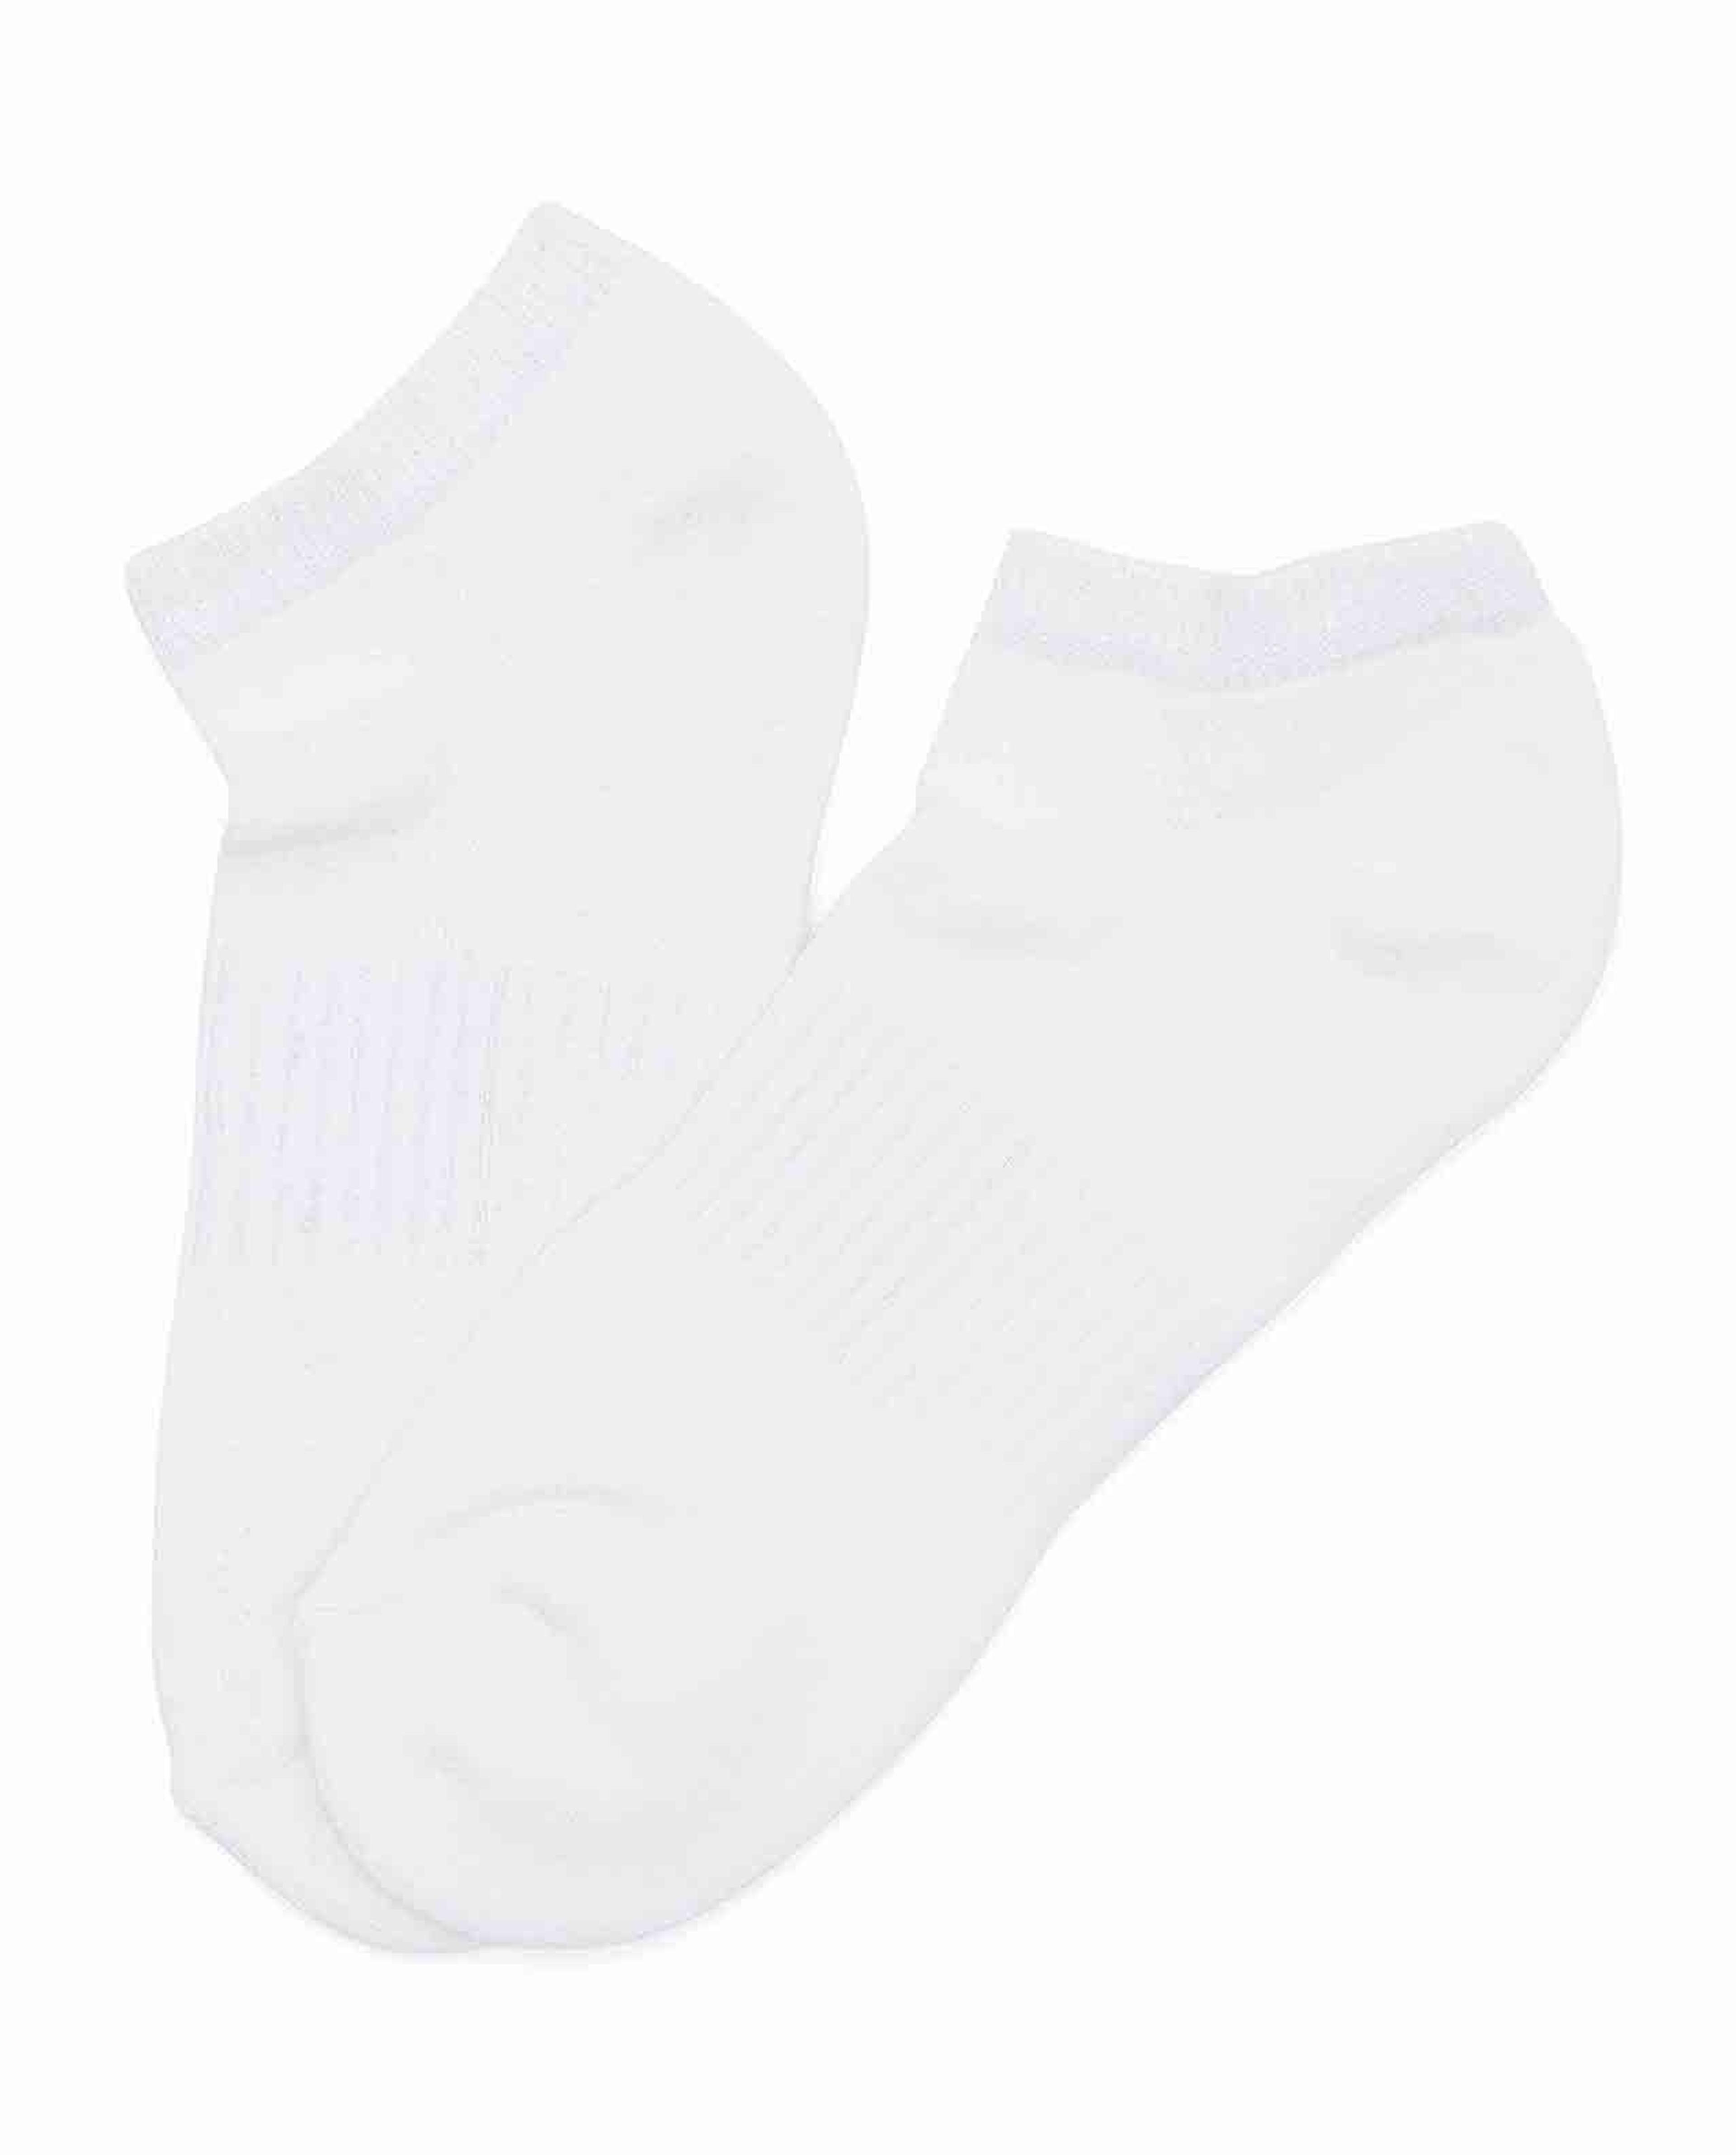 Pack of 3 Ankle Socks